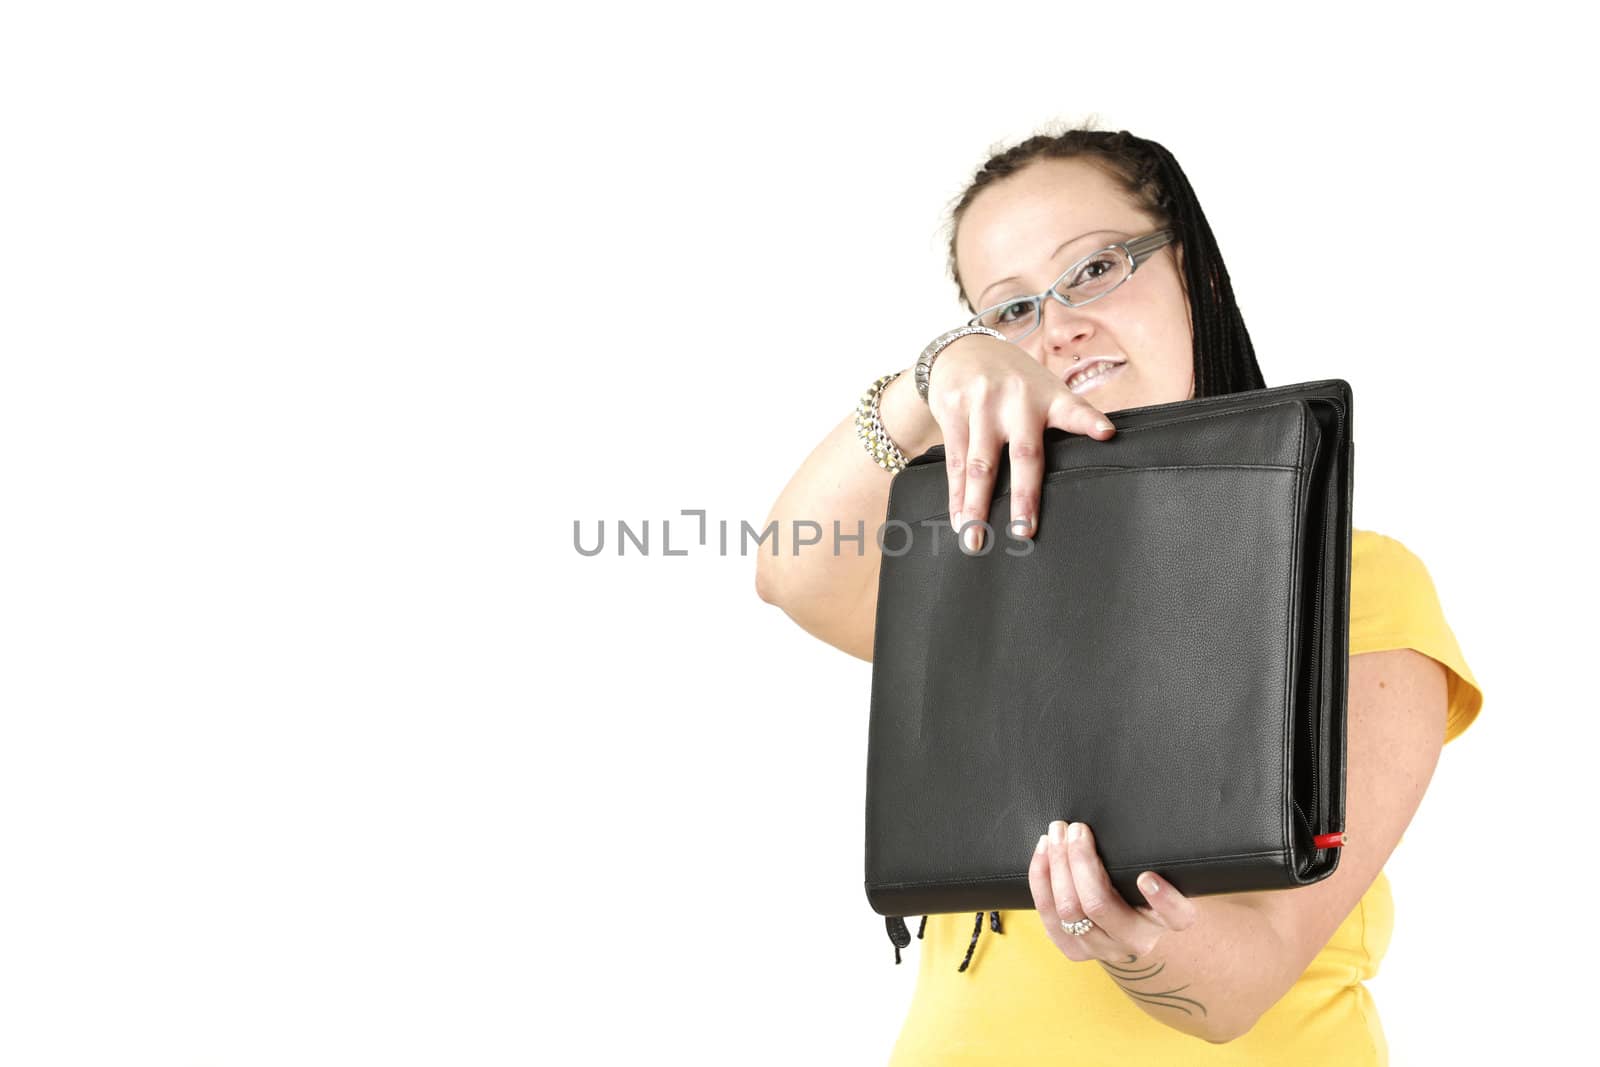 Businesswoman offers black bag